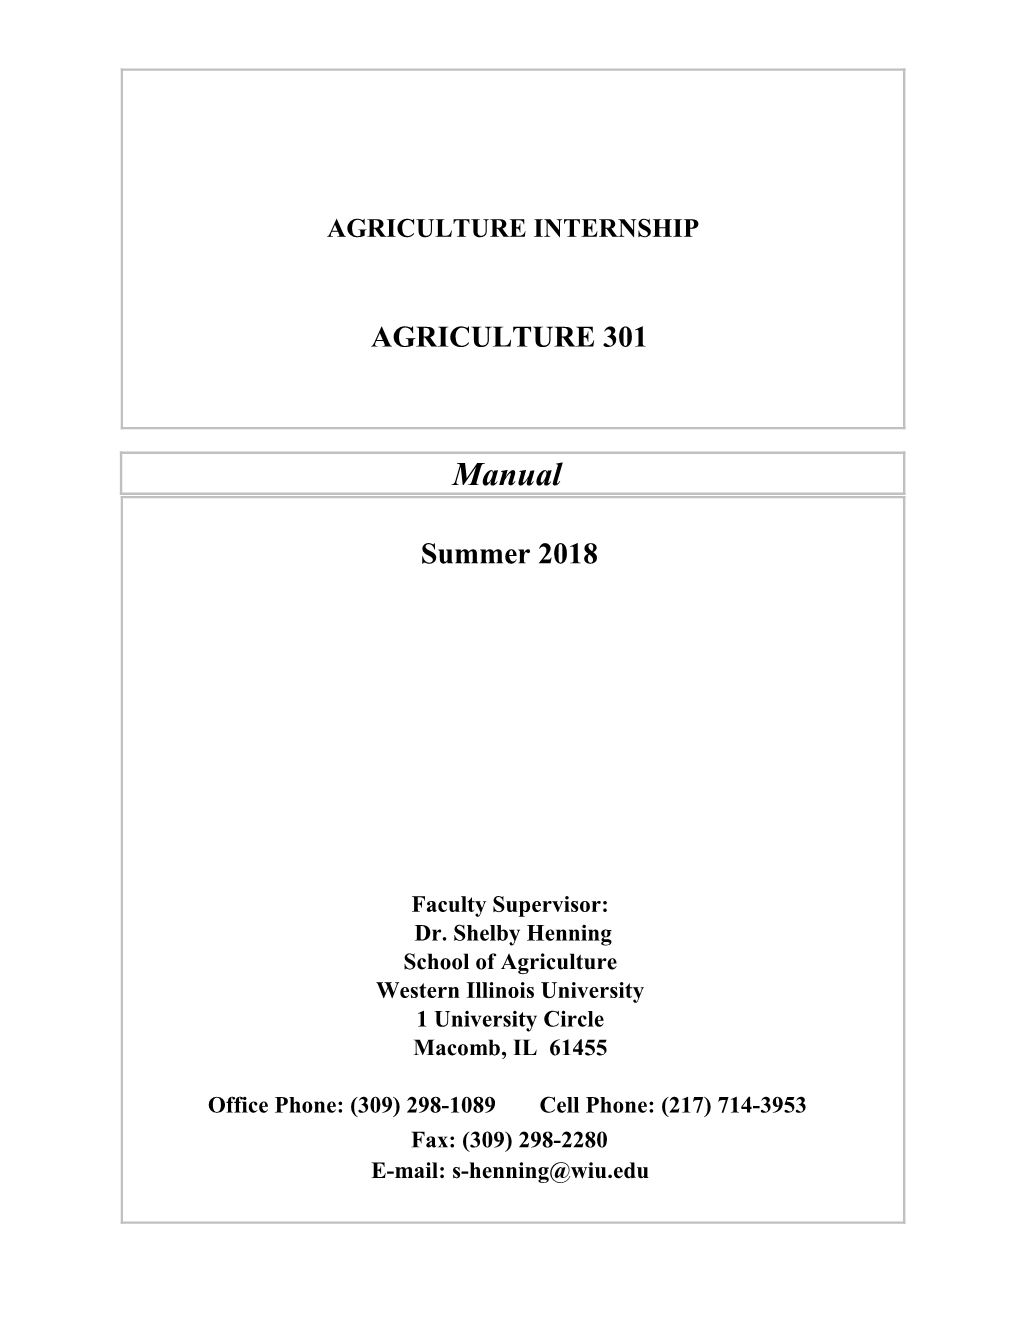 Agriculture Internship